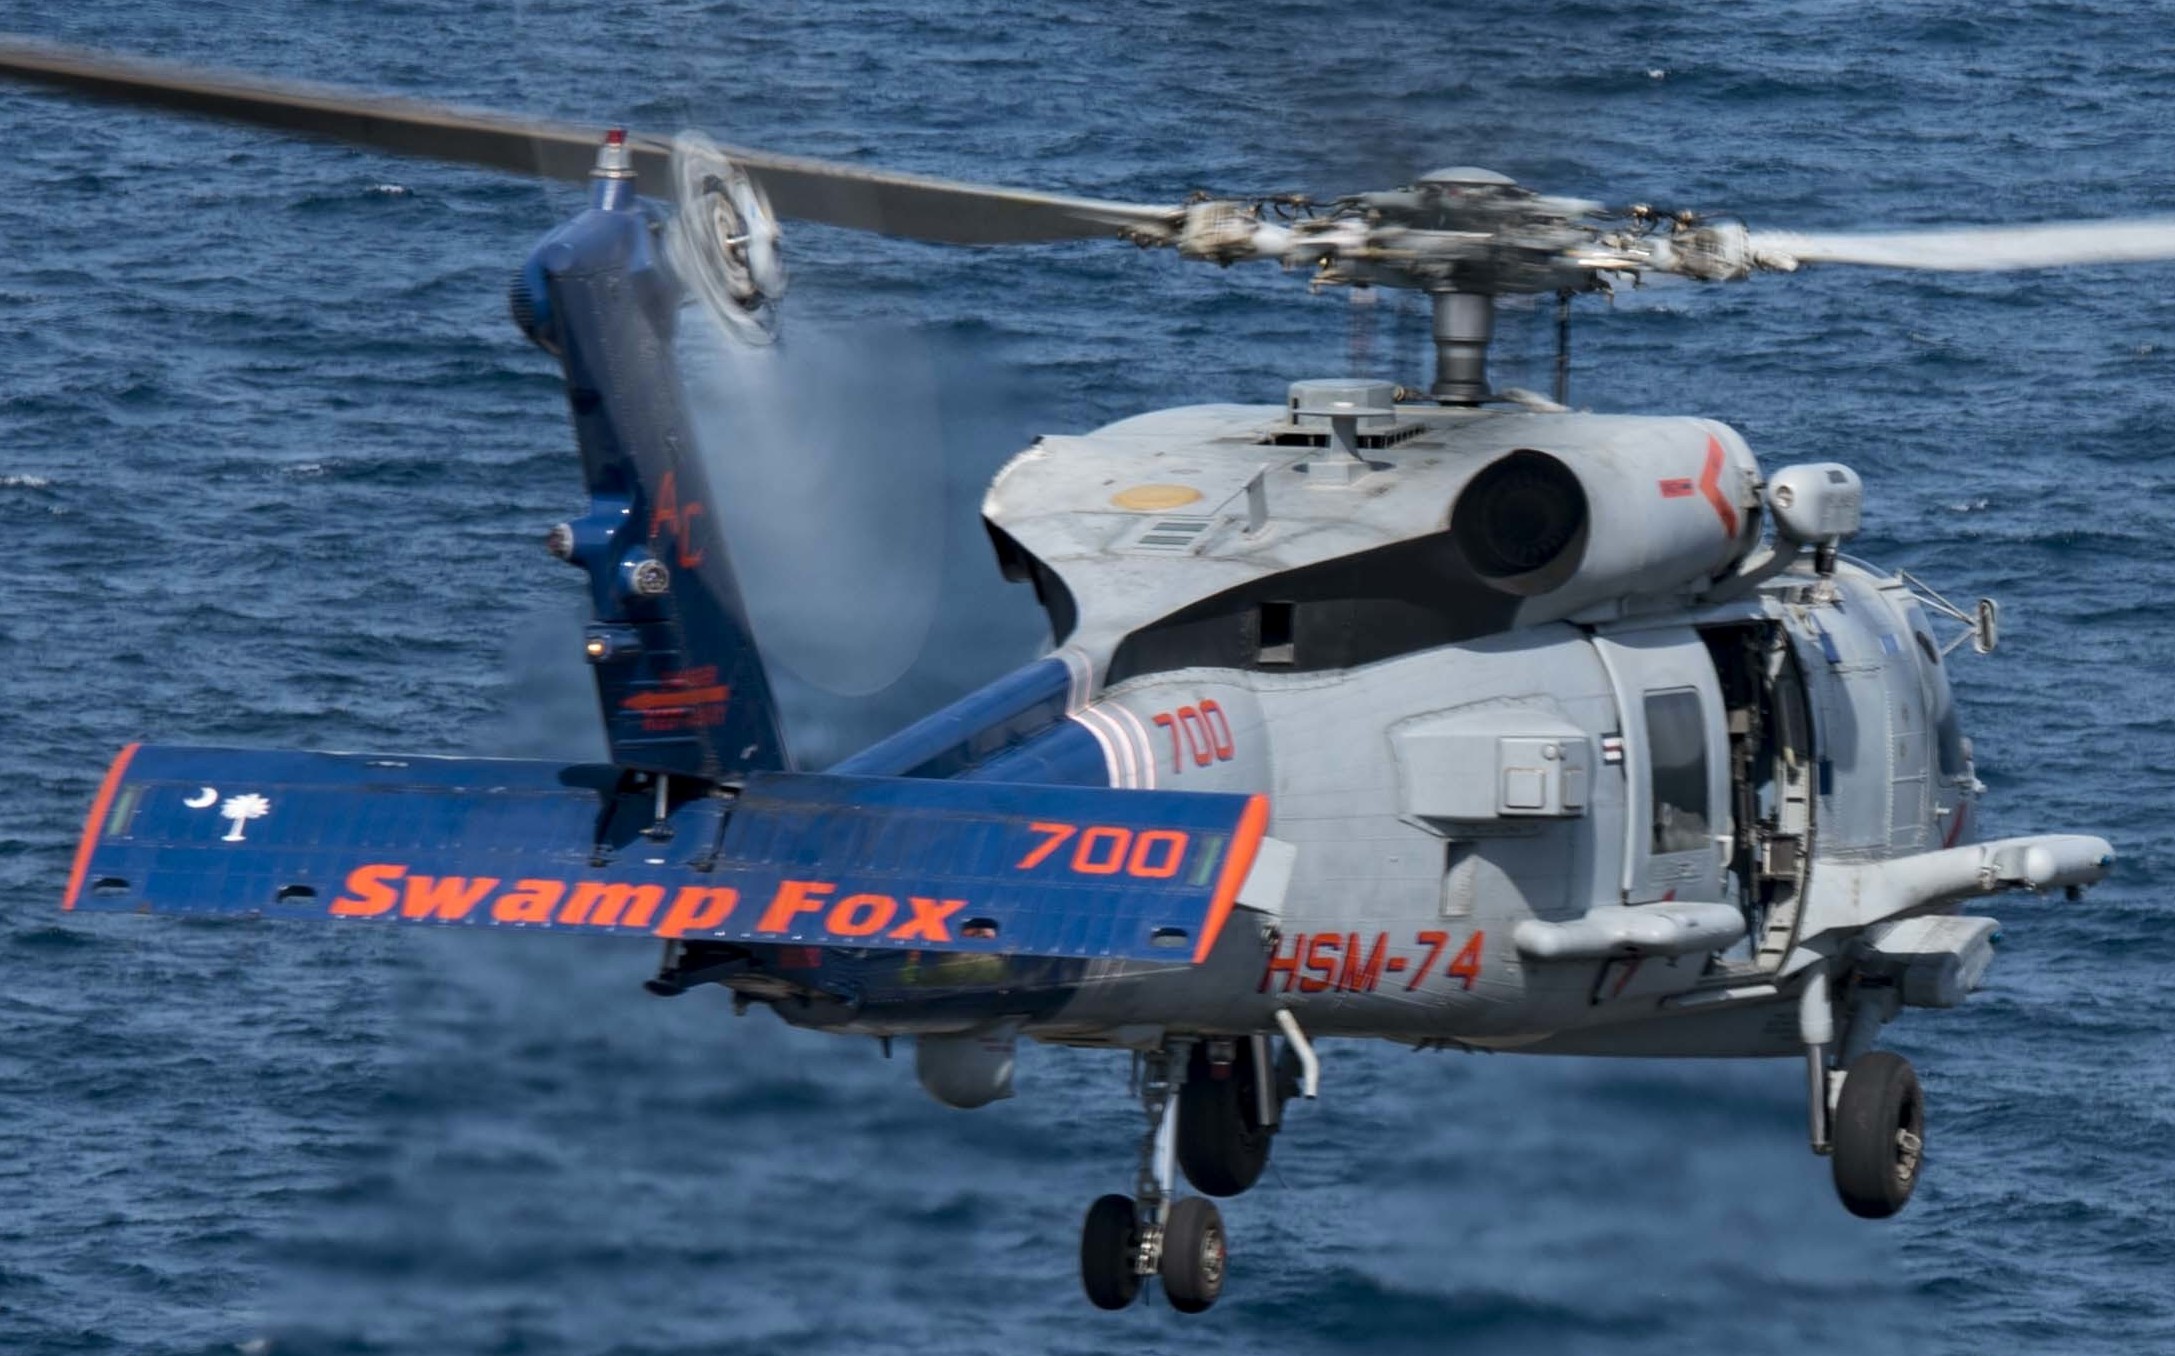 hsm-74 swamp foxes helicopter maritime strike squadron mh-60r seahawk cvw-3 cvn-69 uss dwight d. eisenhower 56